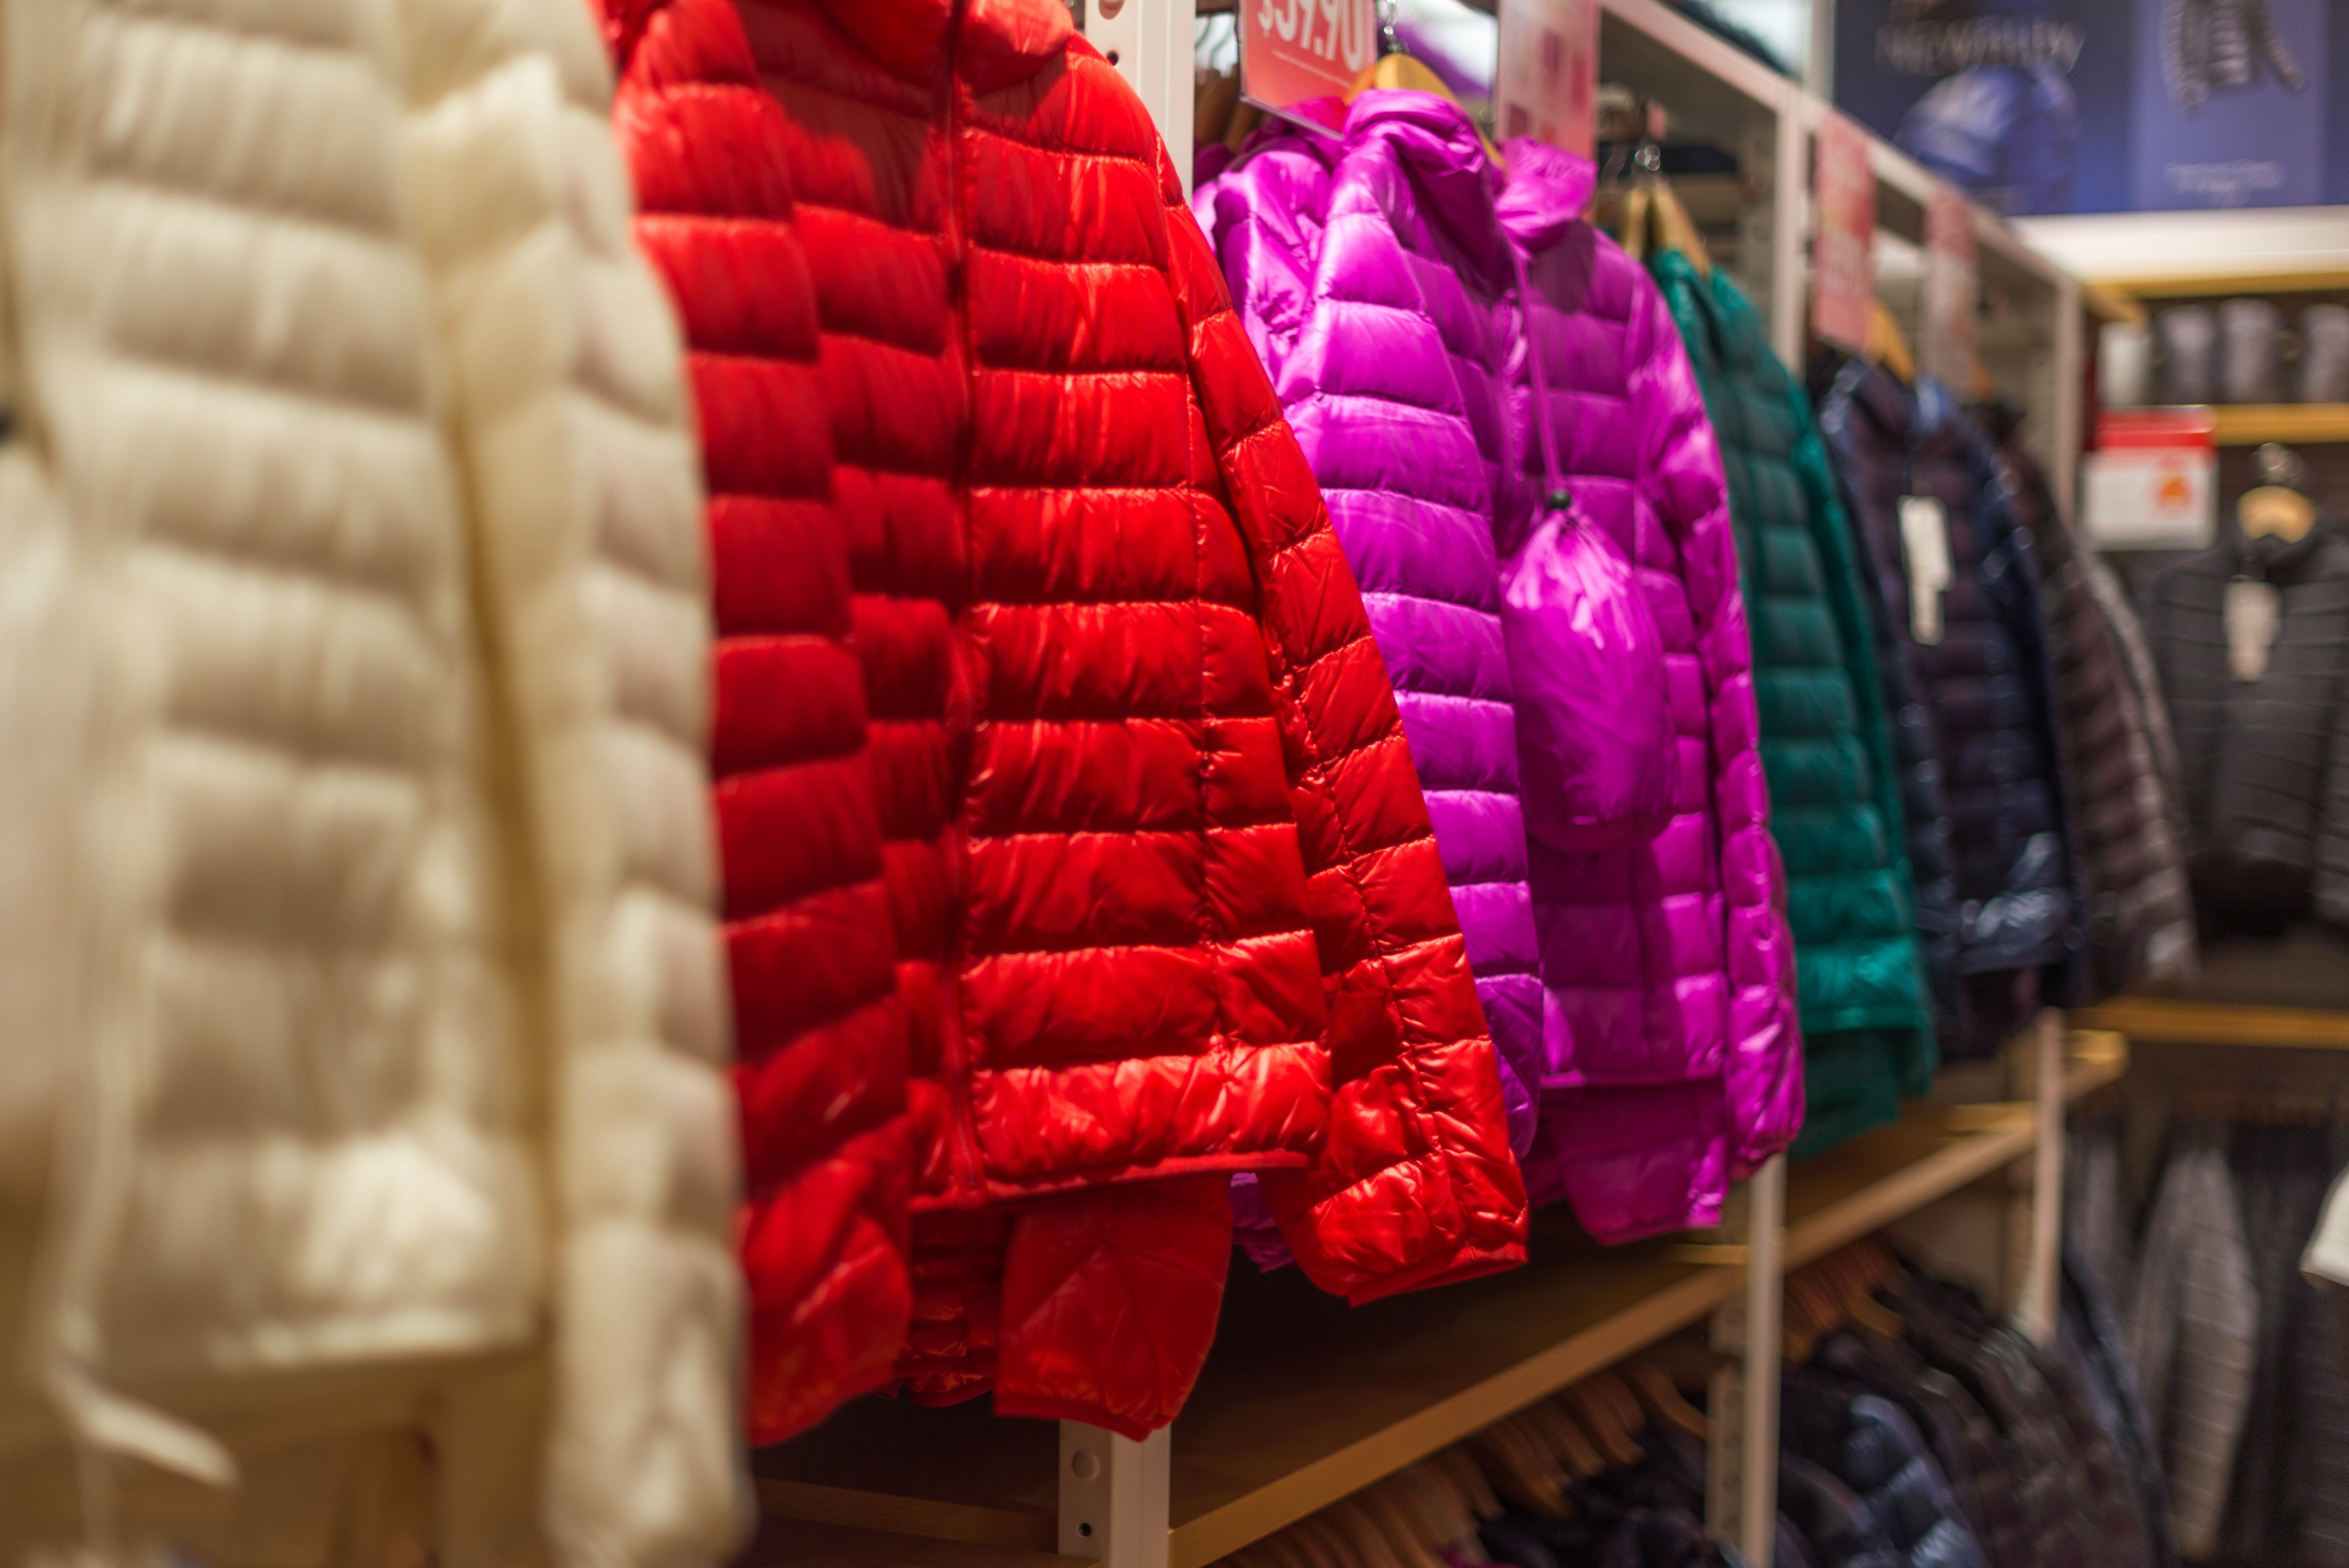 Doris & Macy went shopping for a new winter coat. | Source: Pexels